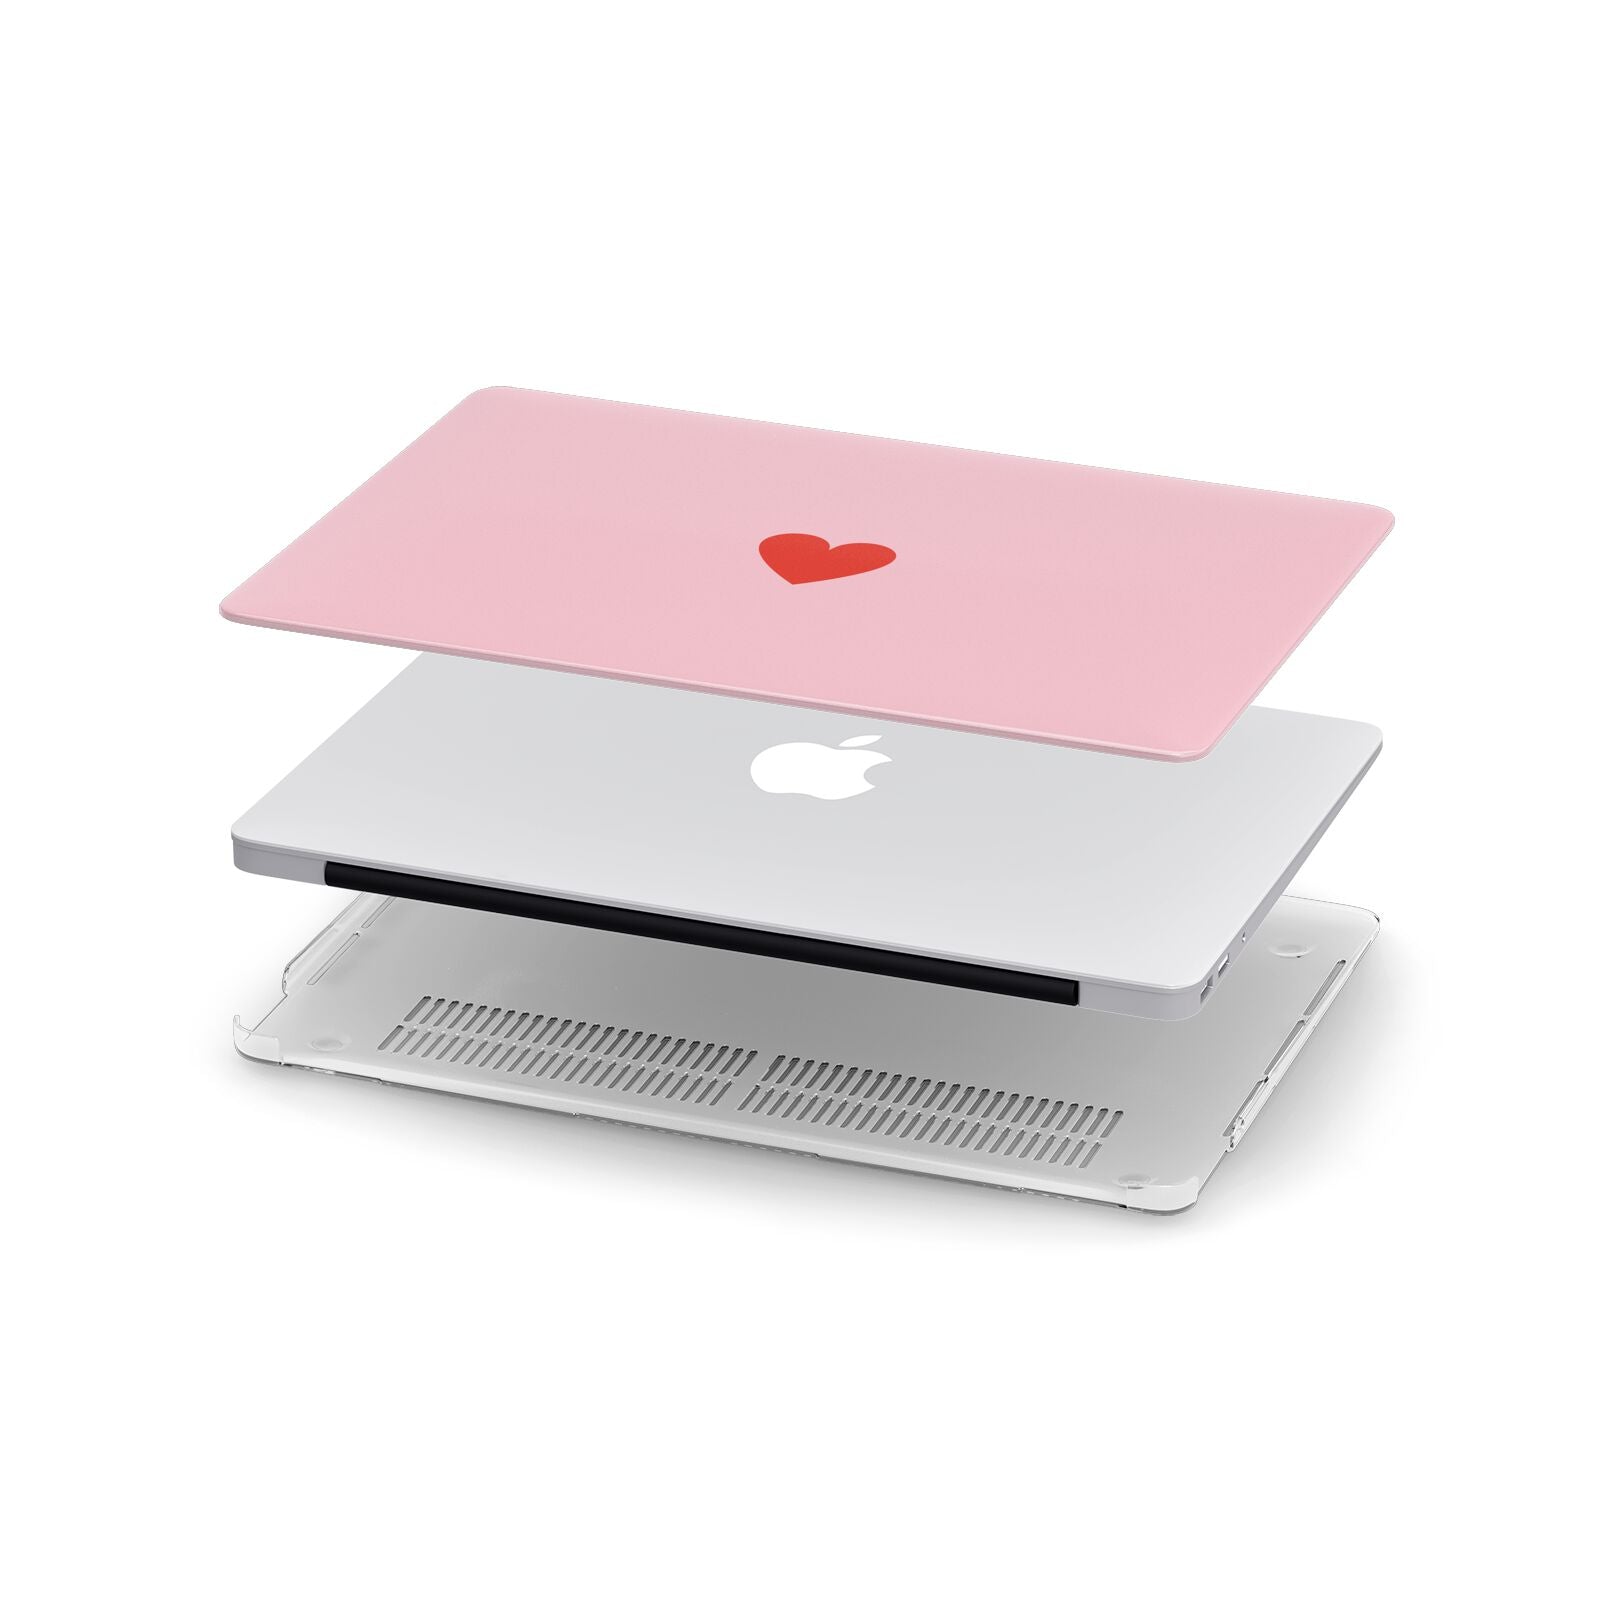 Red Heart Apple MacBook Case in Detail